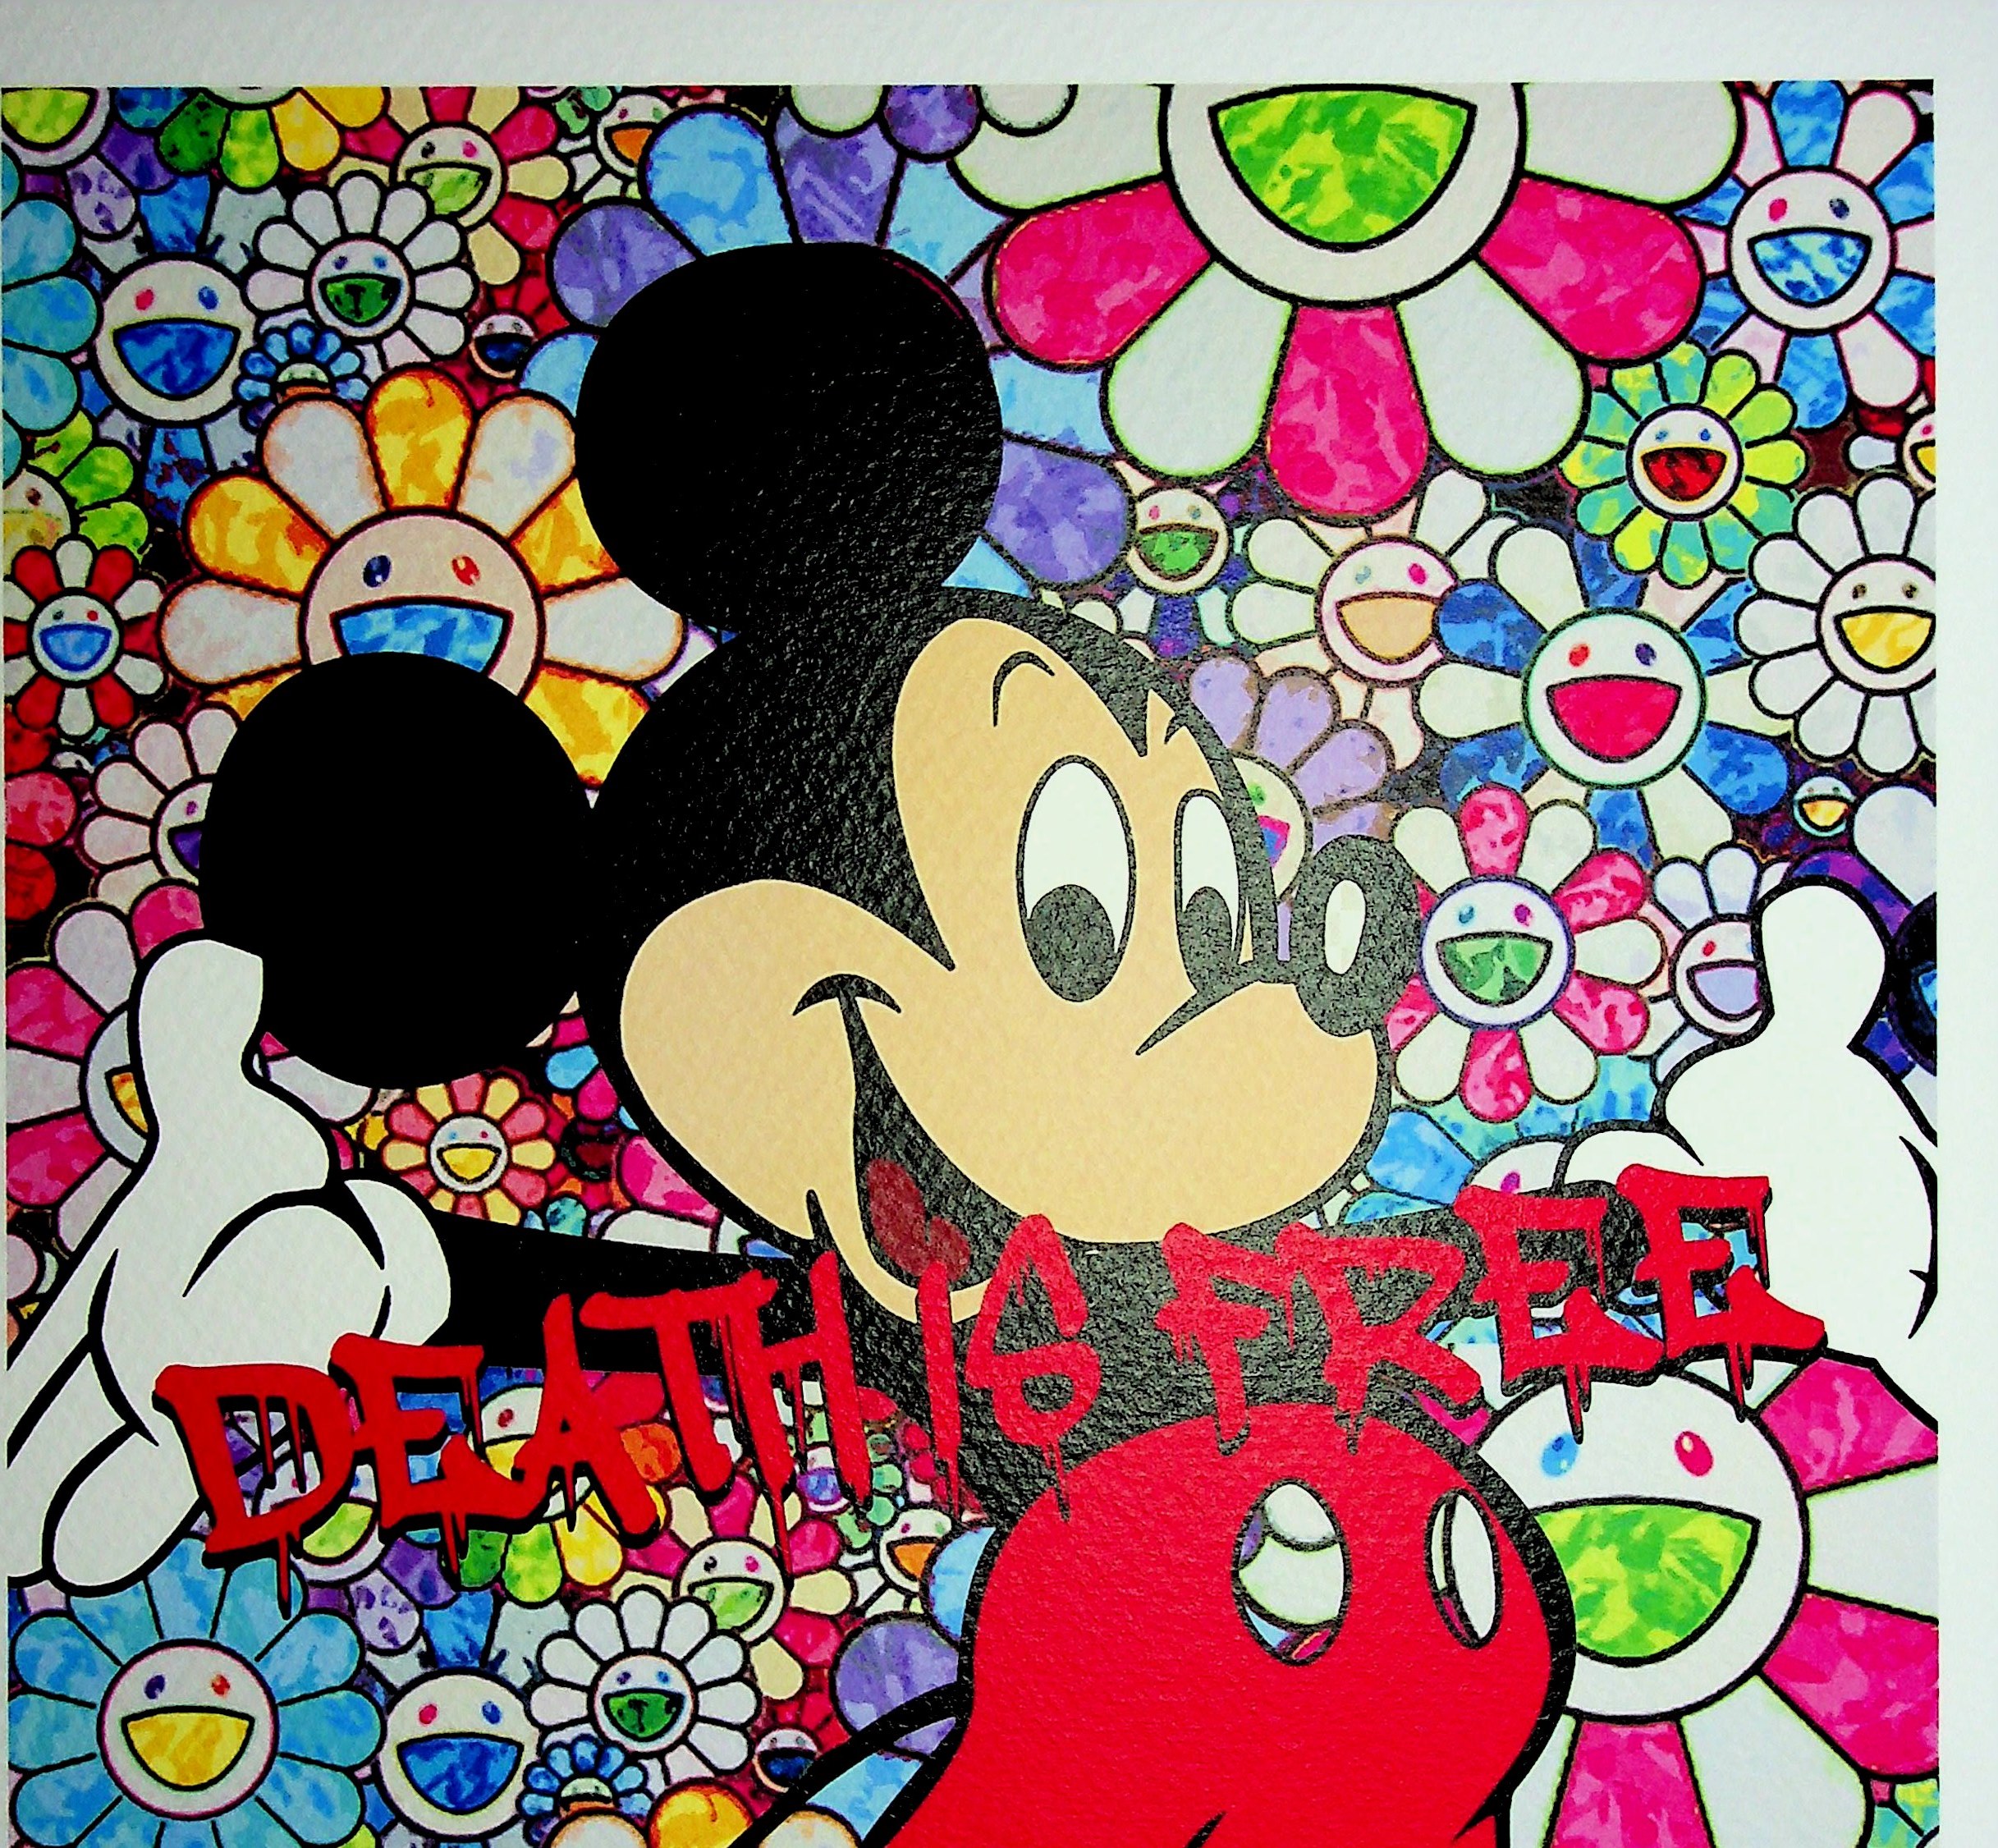 Death NYC - Pikachu X Supreme X Coca Cola - Original signed screenprint -  Street Art - Plazzart